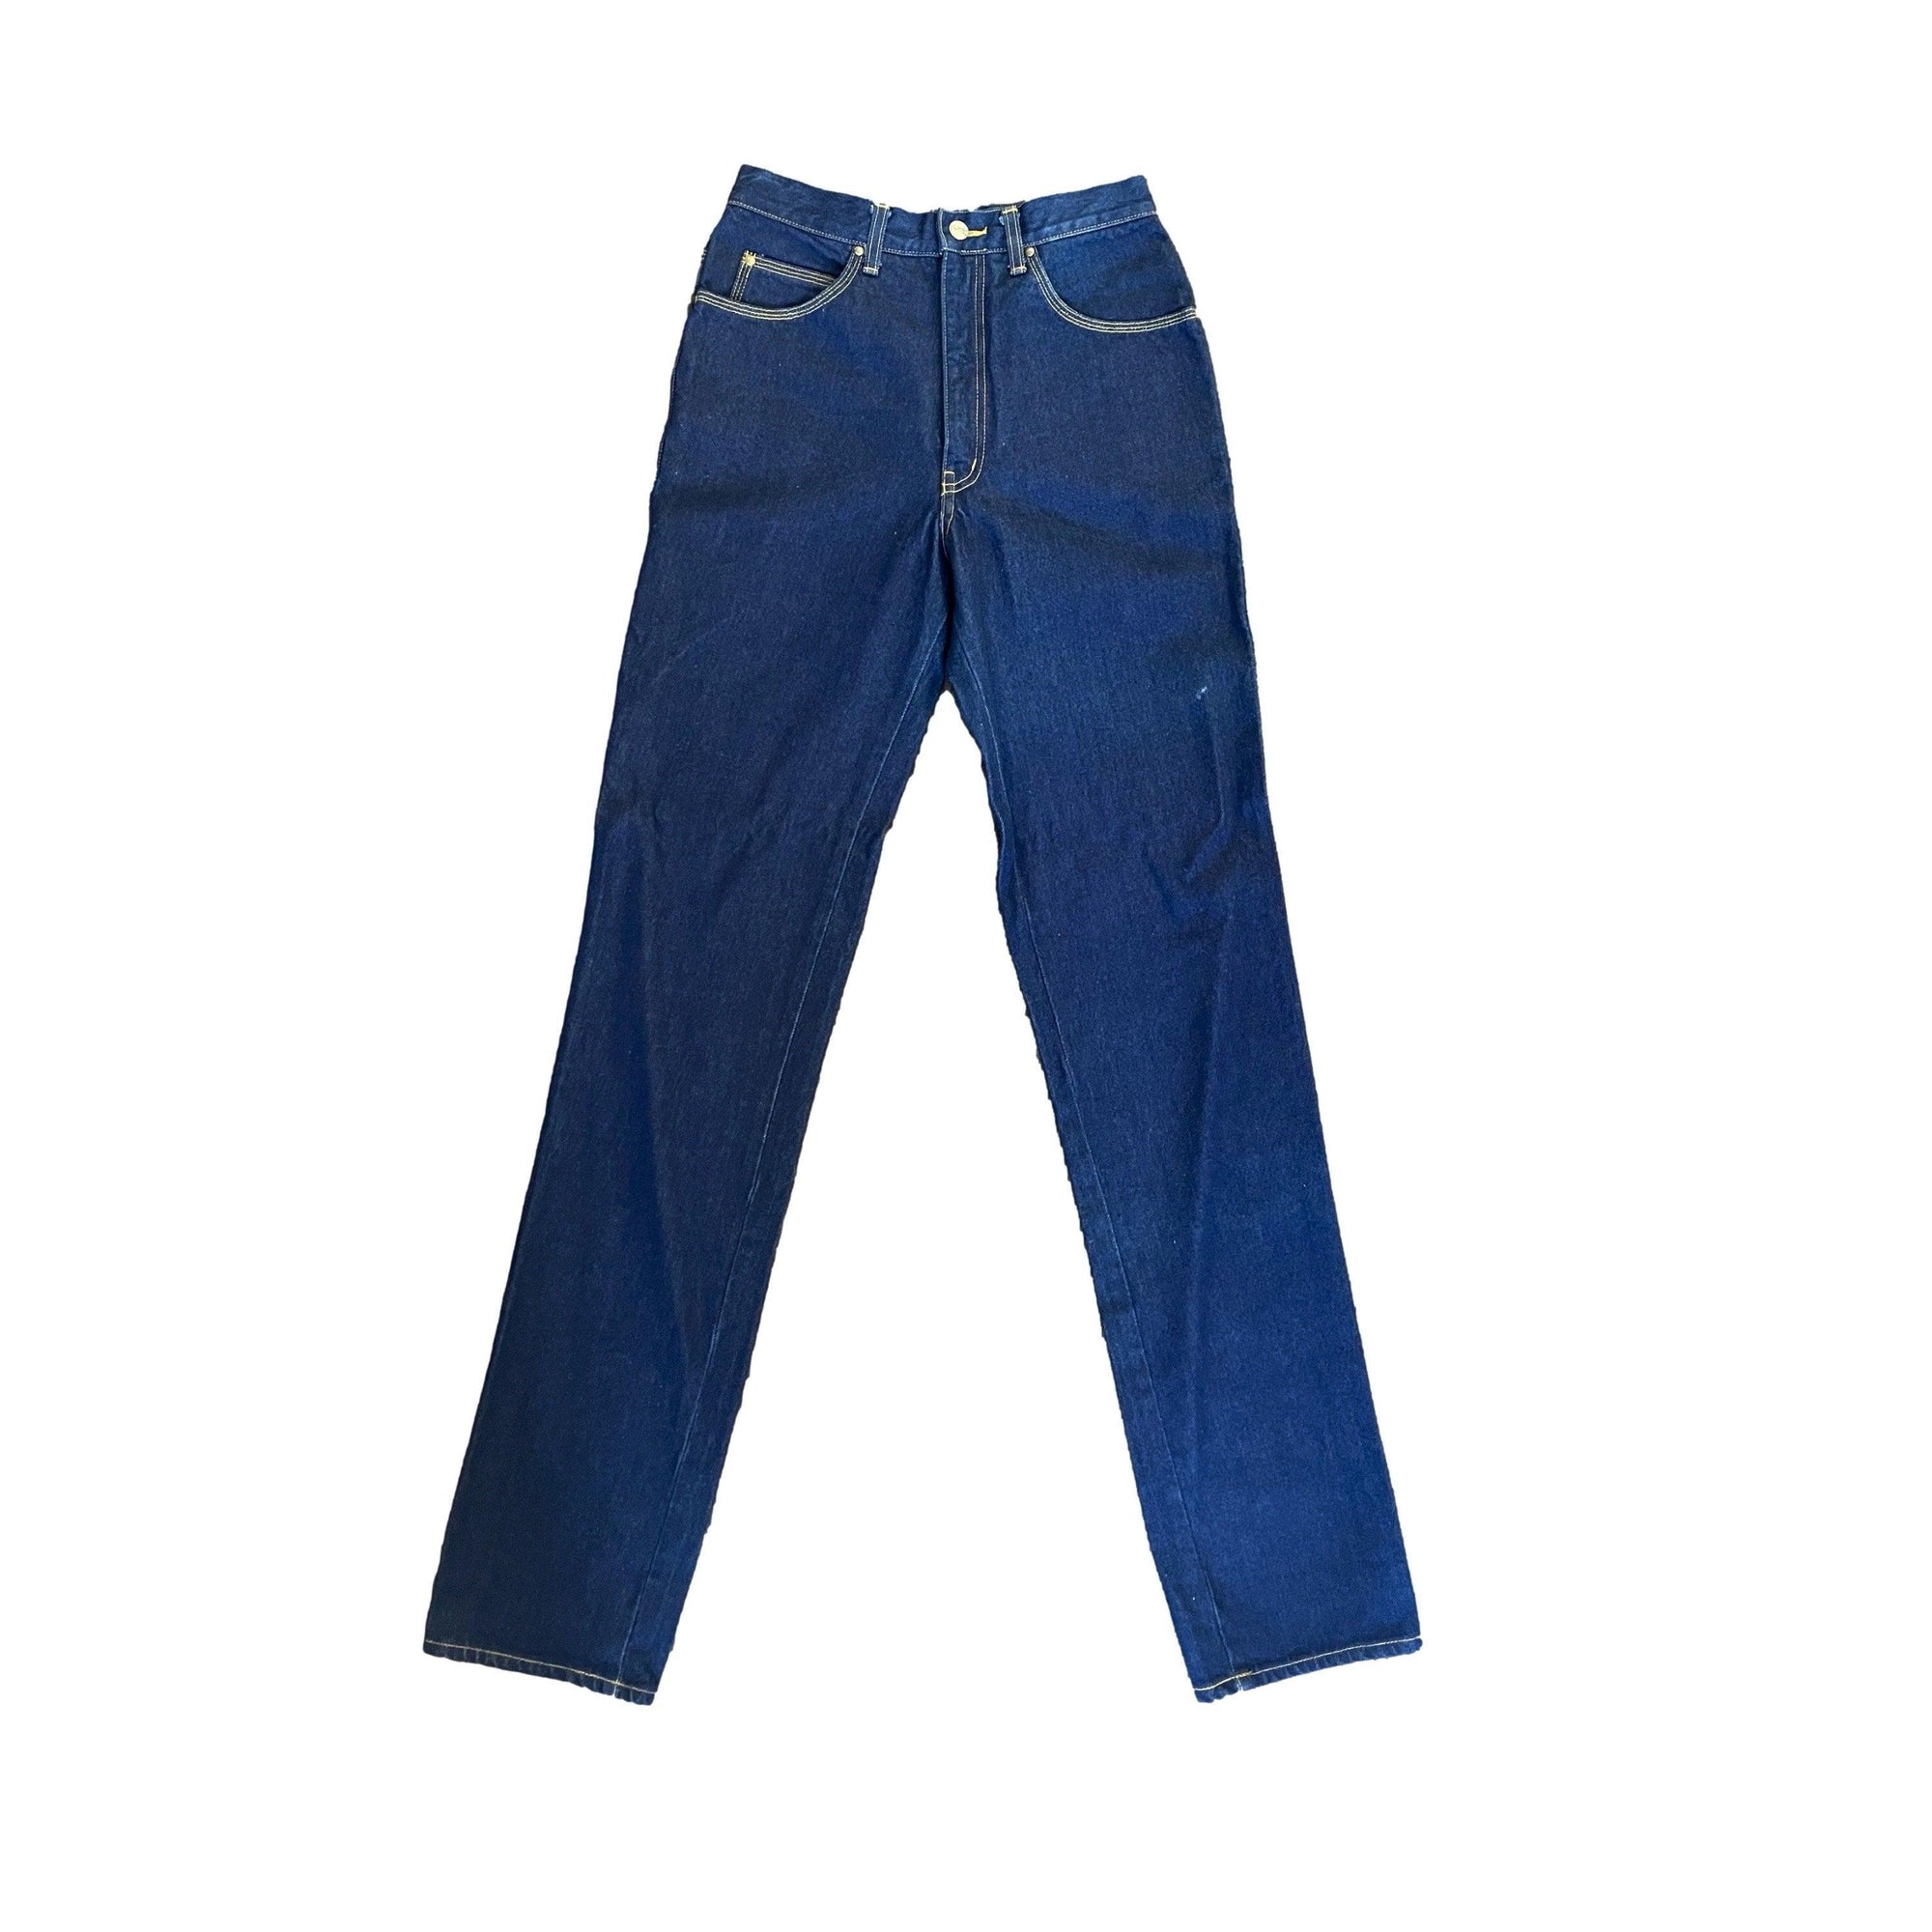 YSL Denim Logo Pocket Jeans - Apparel